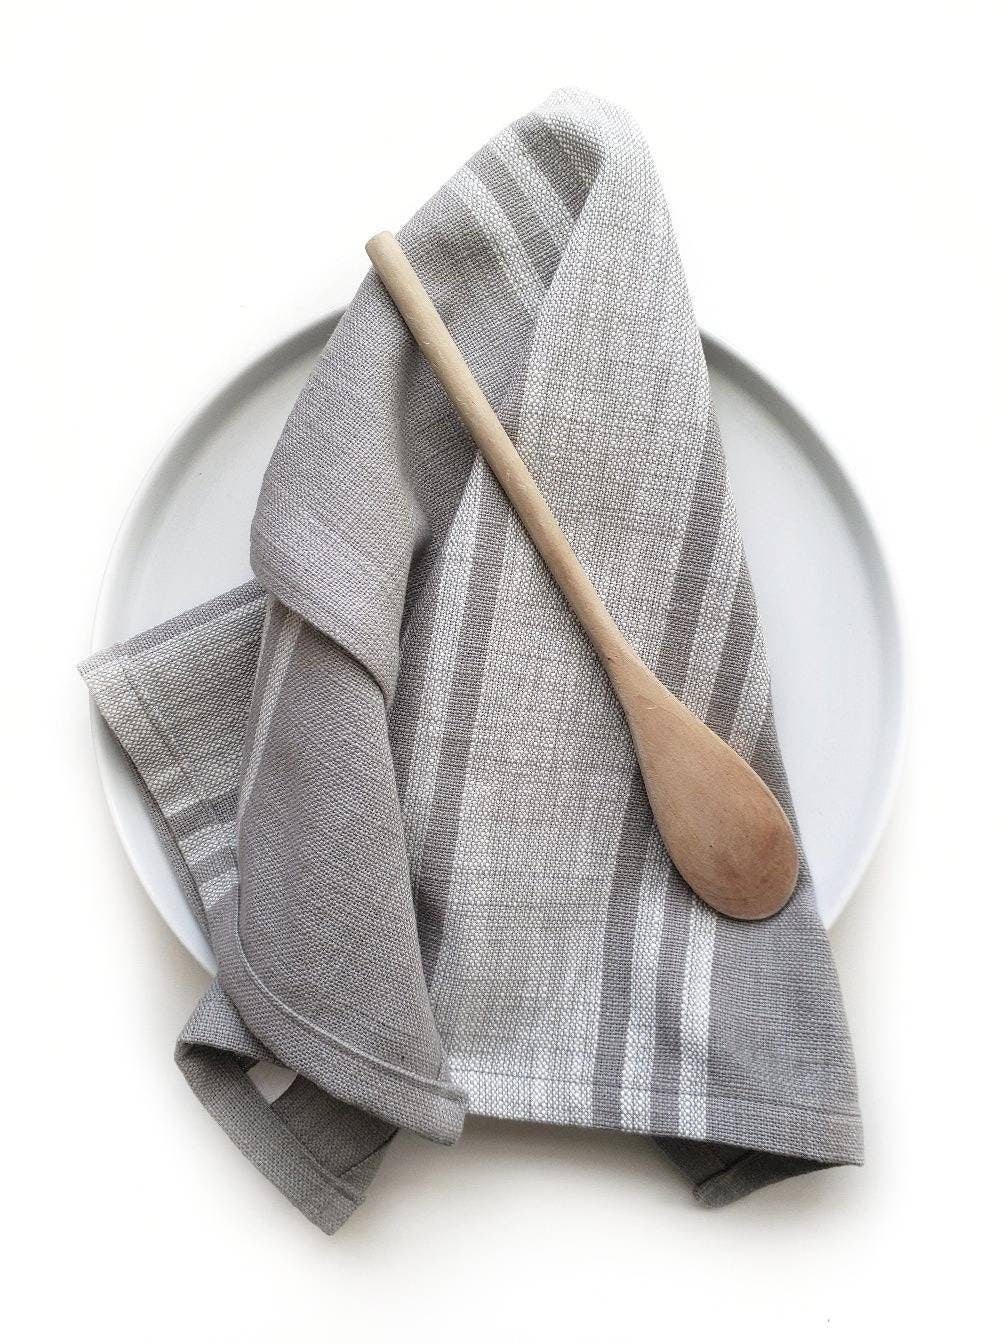 Gray Cotton Towel